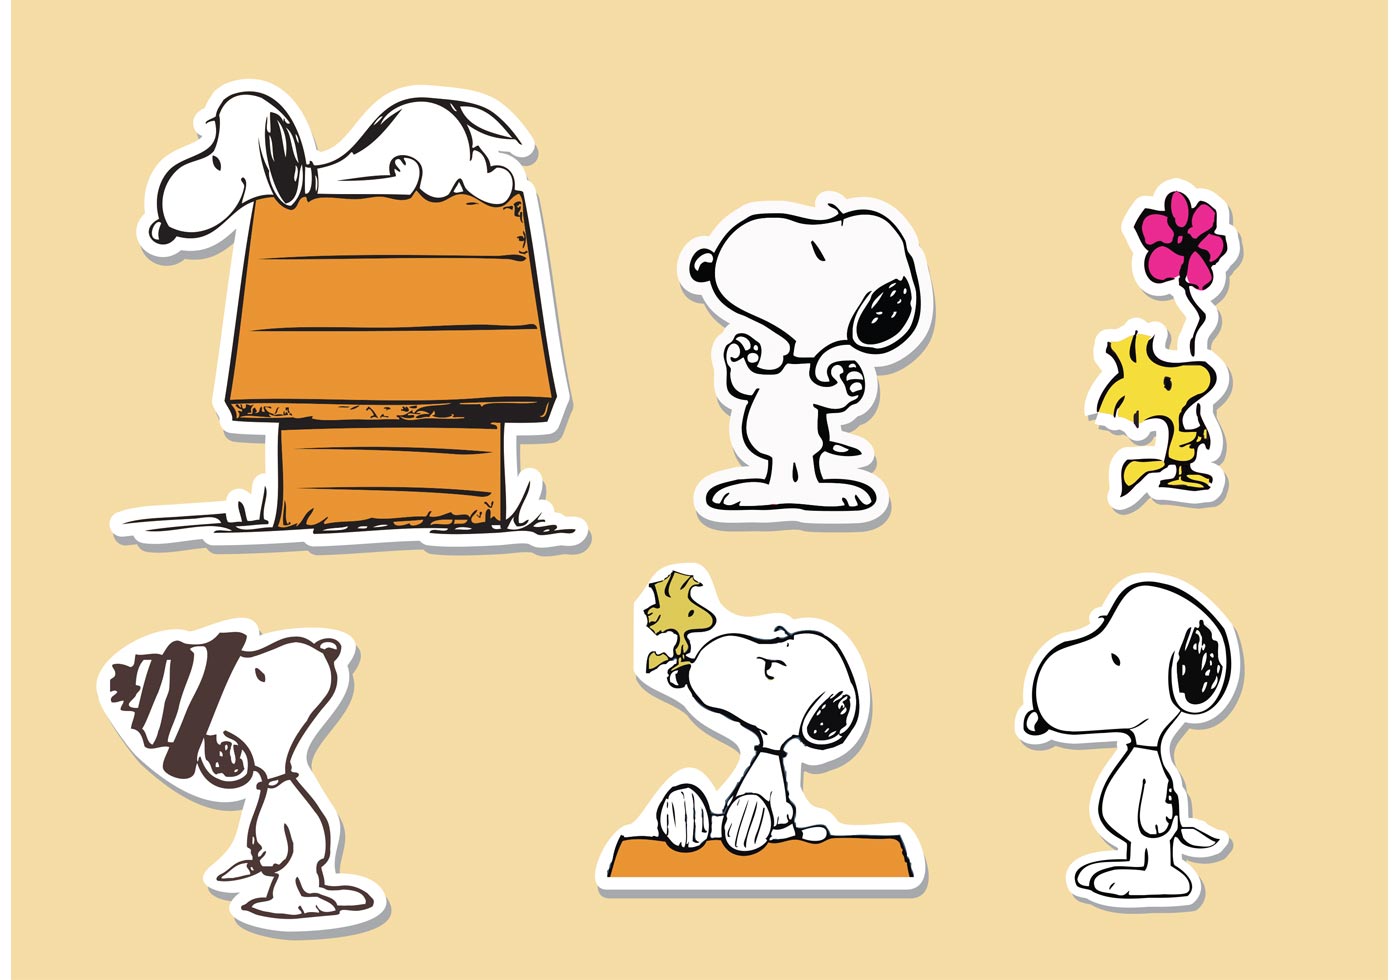 Snoopy Sticker Vectors - Download Free Vector Art, Stock Graphics & Images